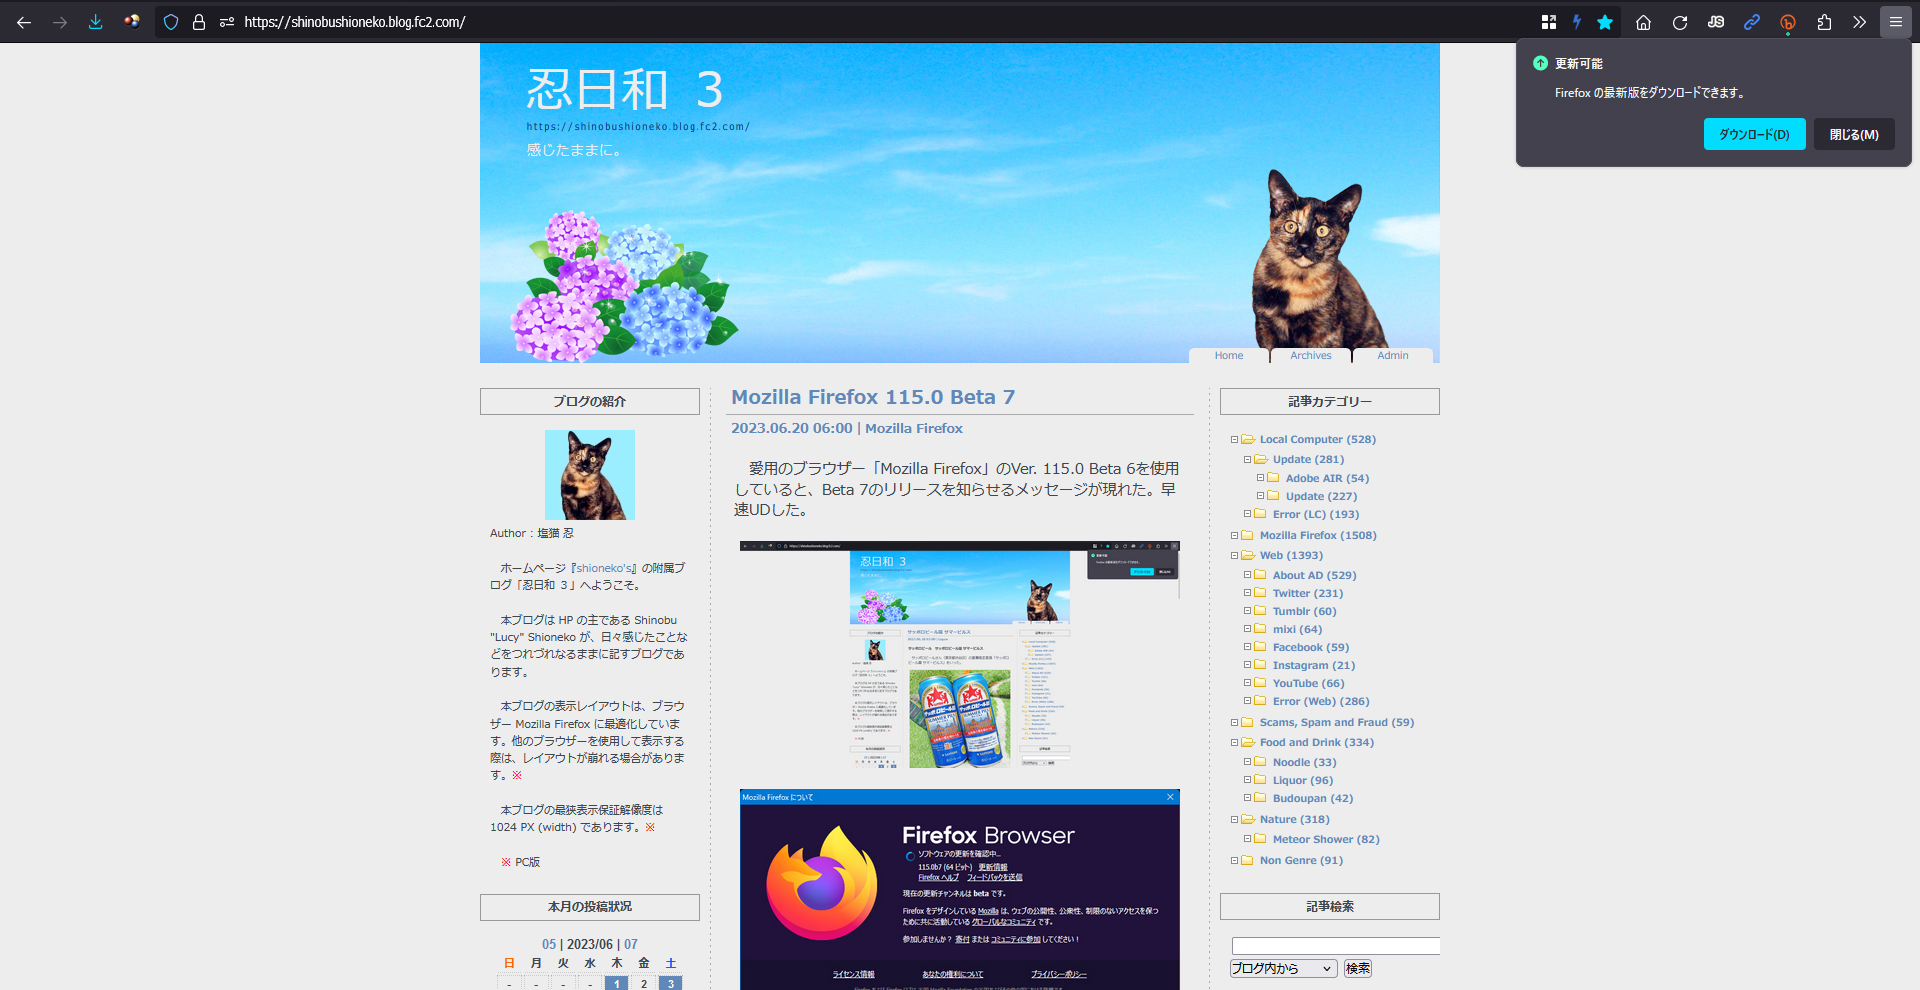 Mozilla Firefox 115.0 Beta 8